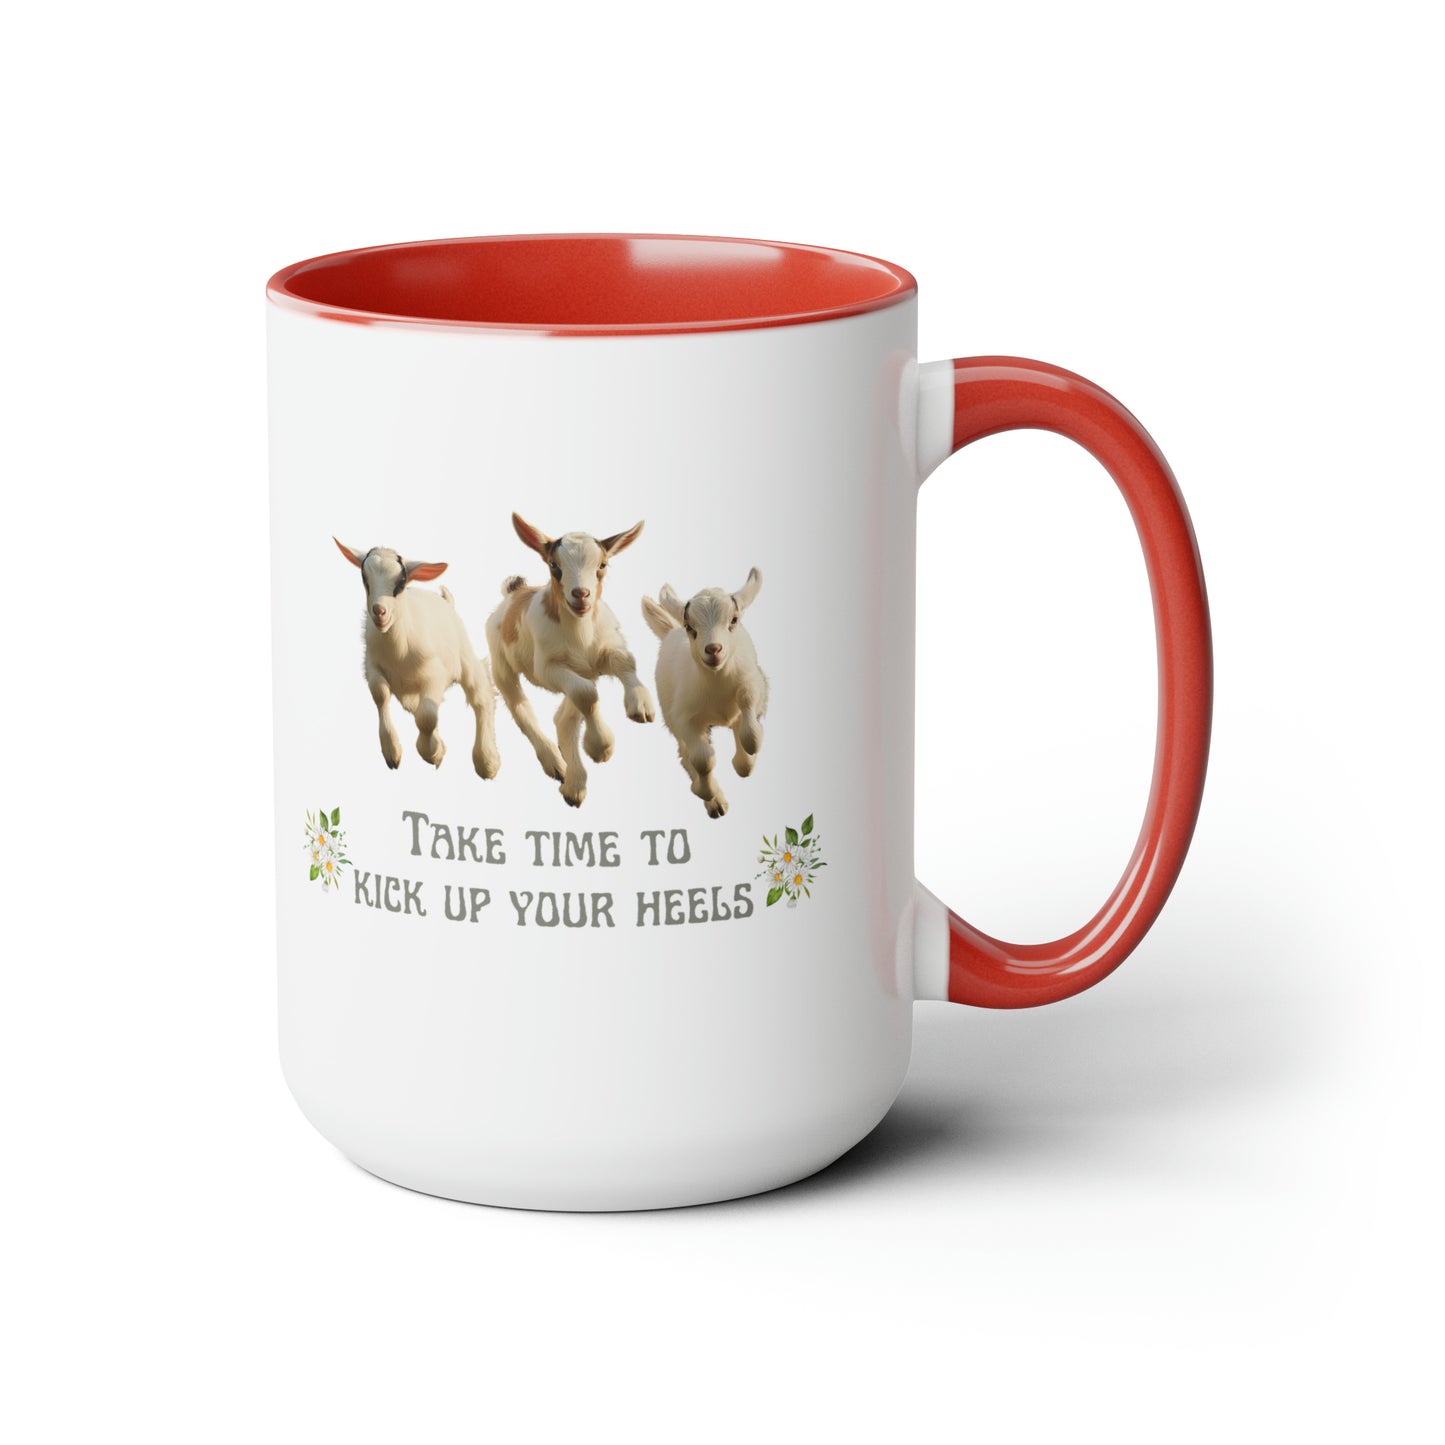 Cute Baby Goats Mug! Motivational